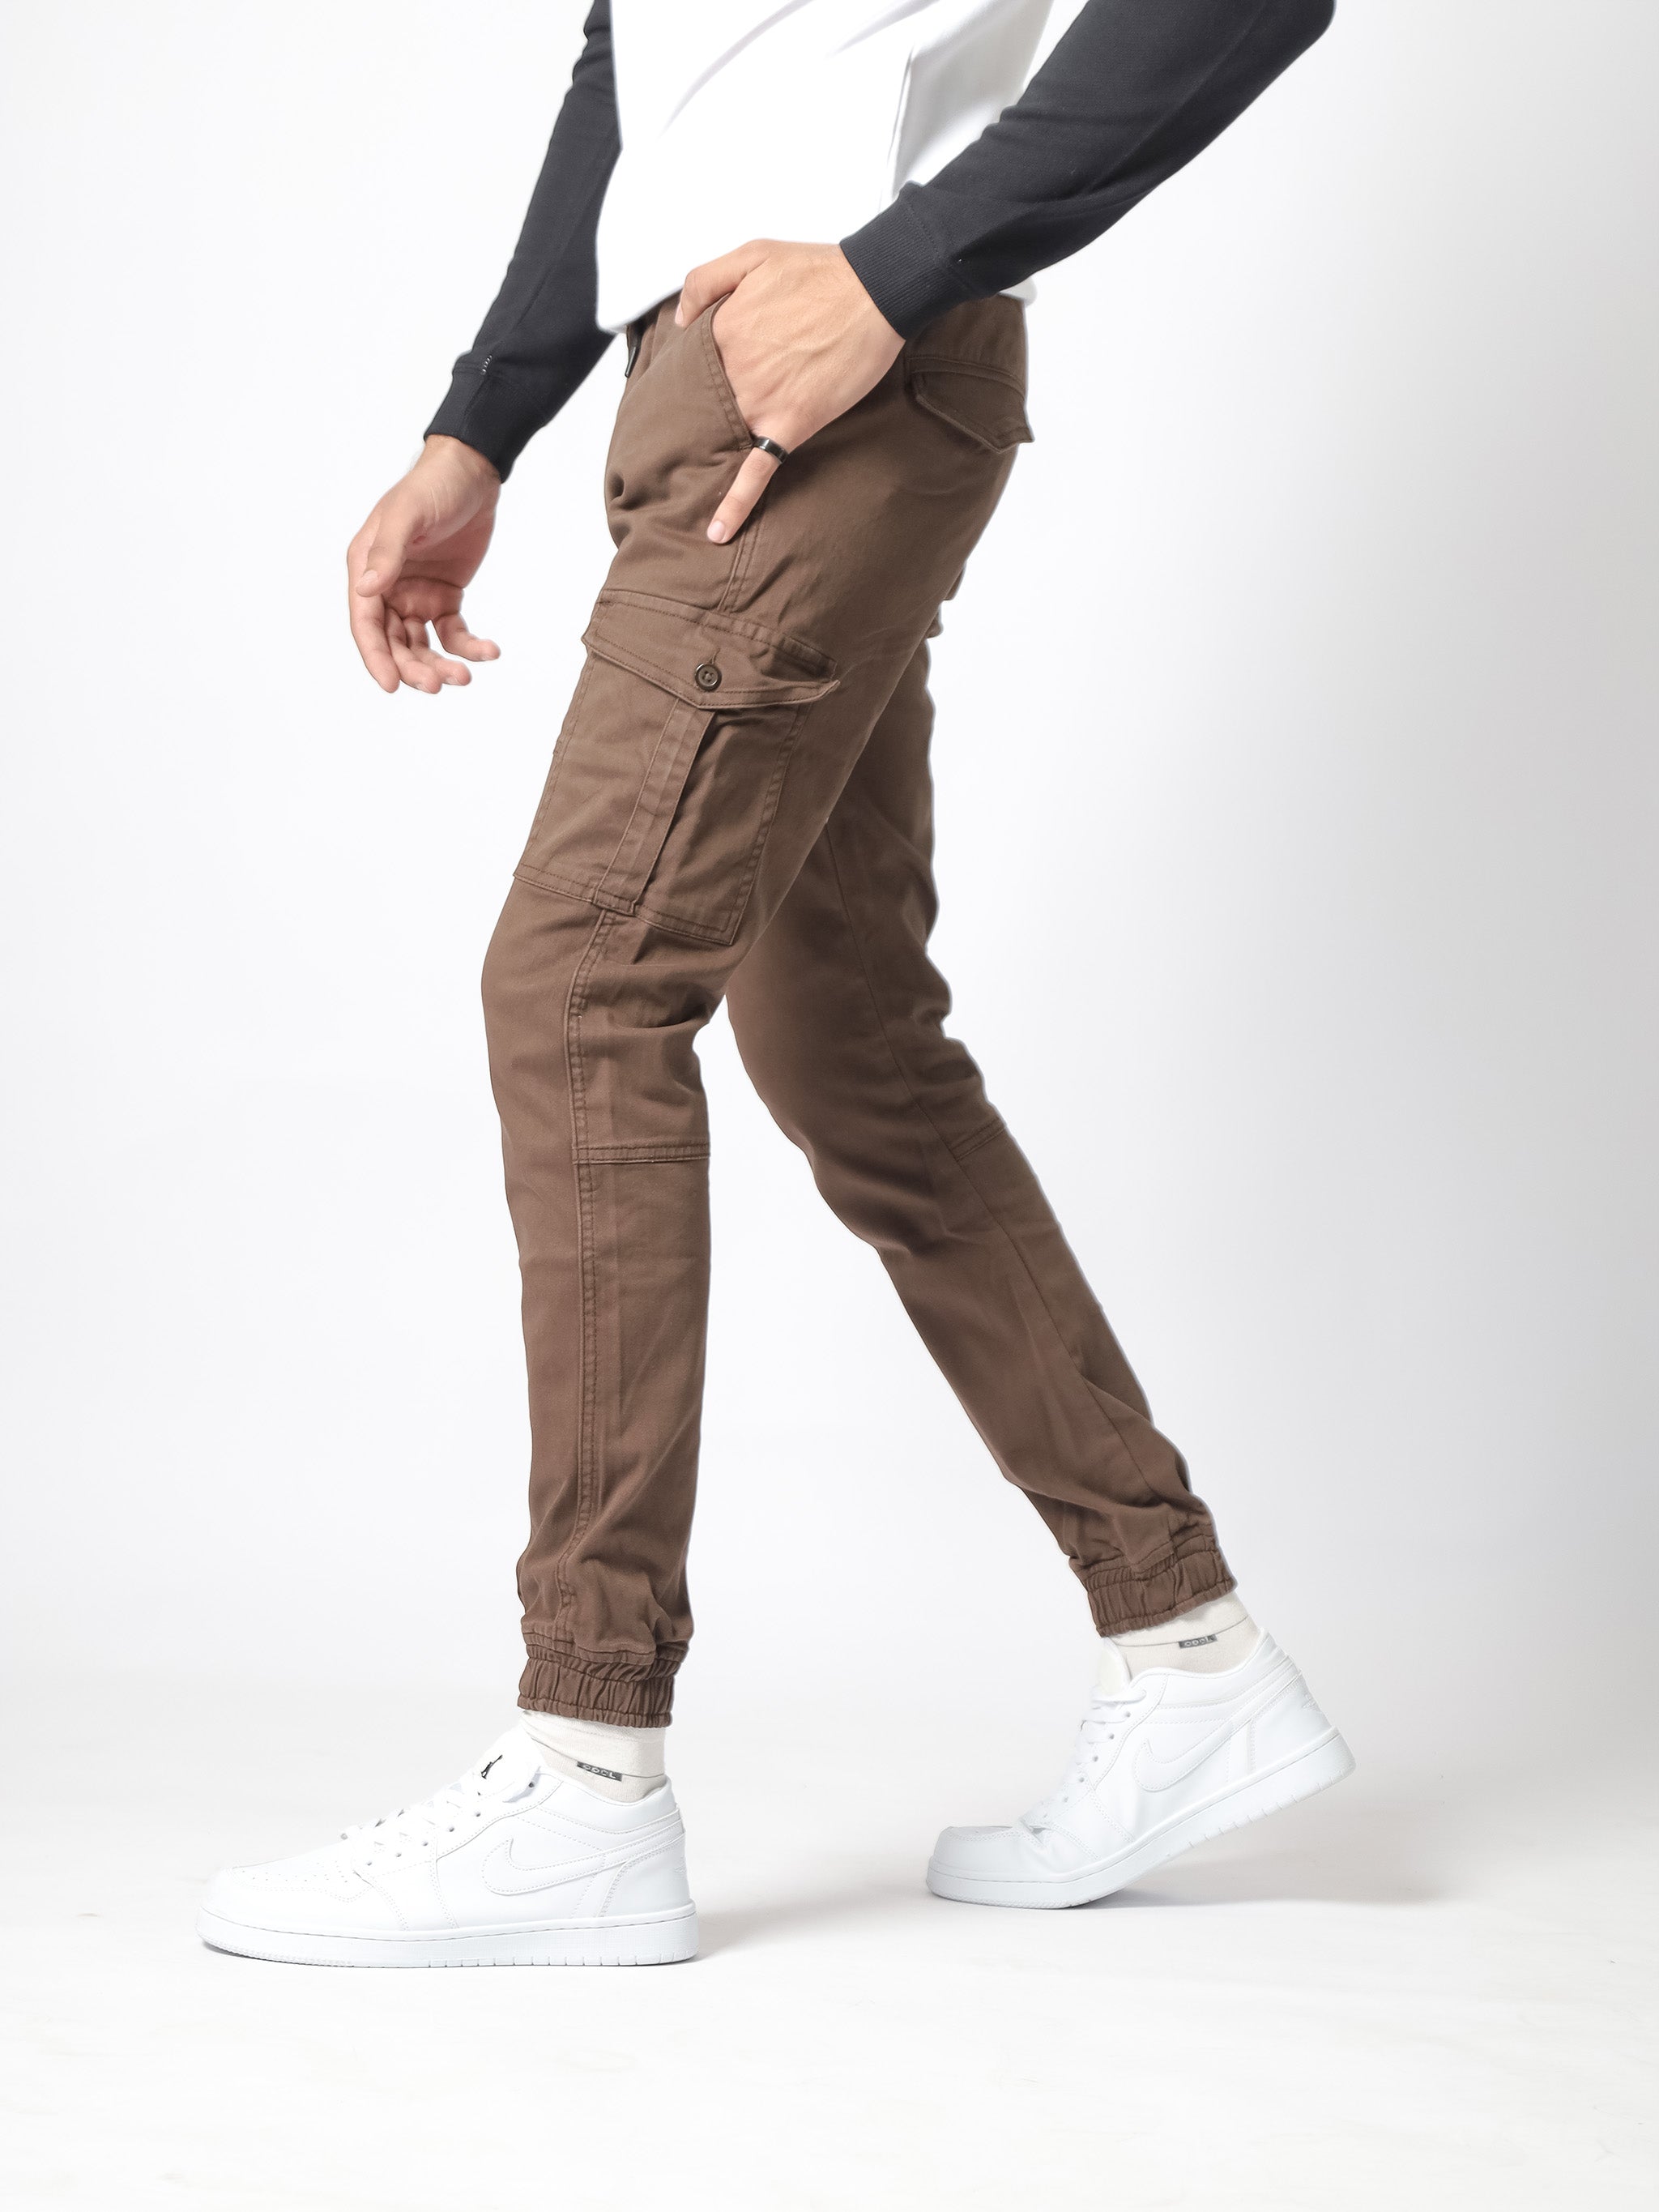 aesthetic brown outfits for males | Moda de ropa, Ropa, Moda